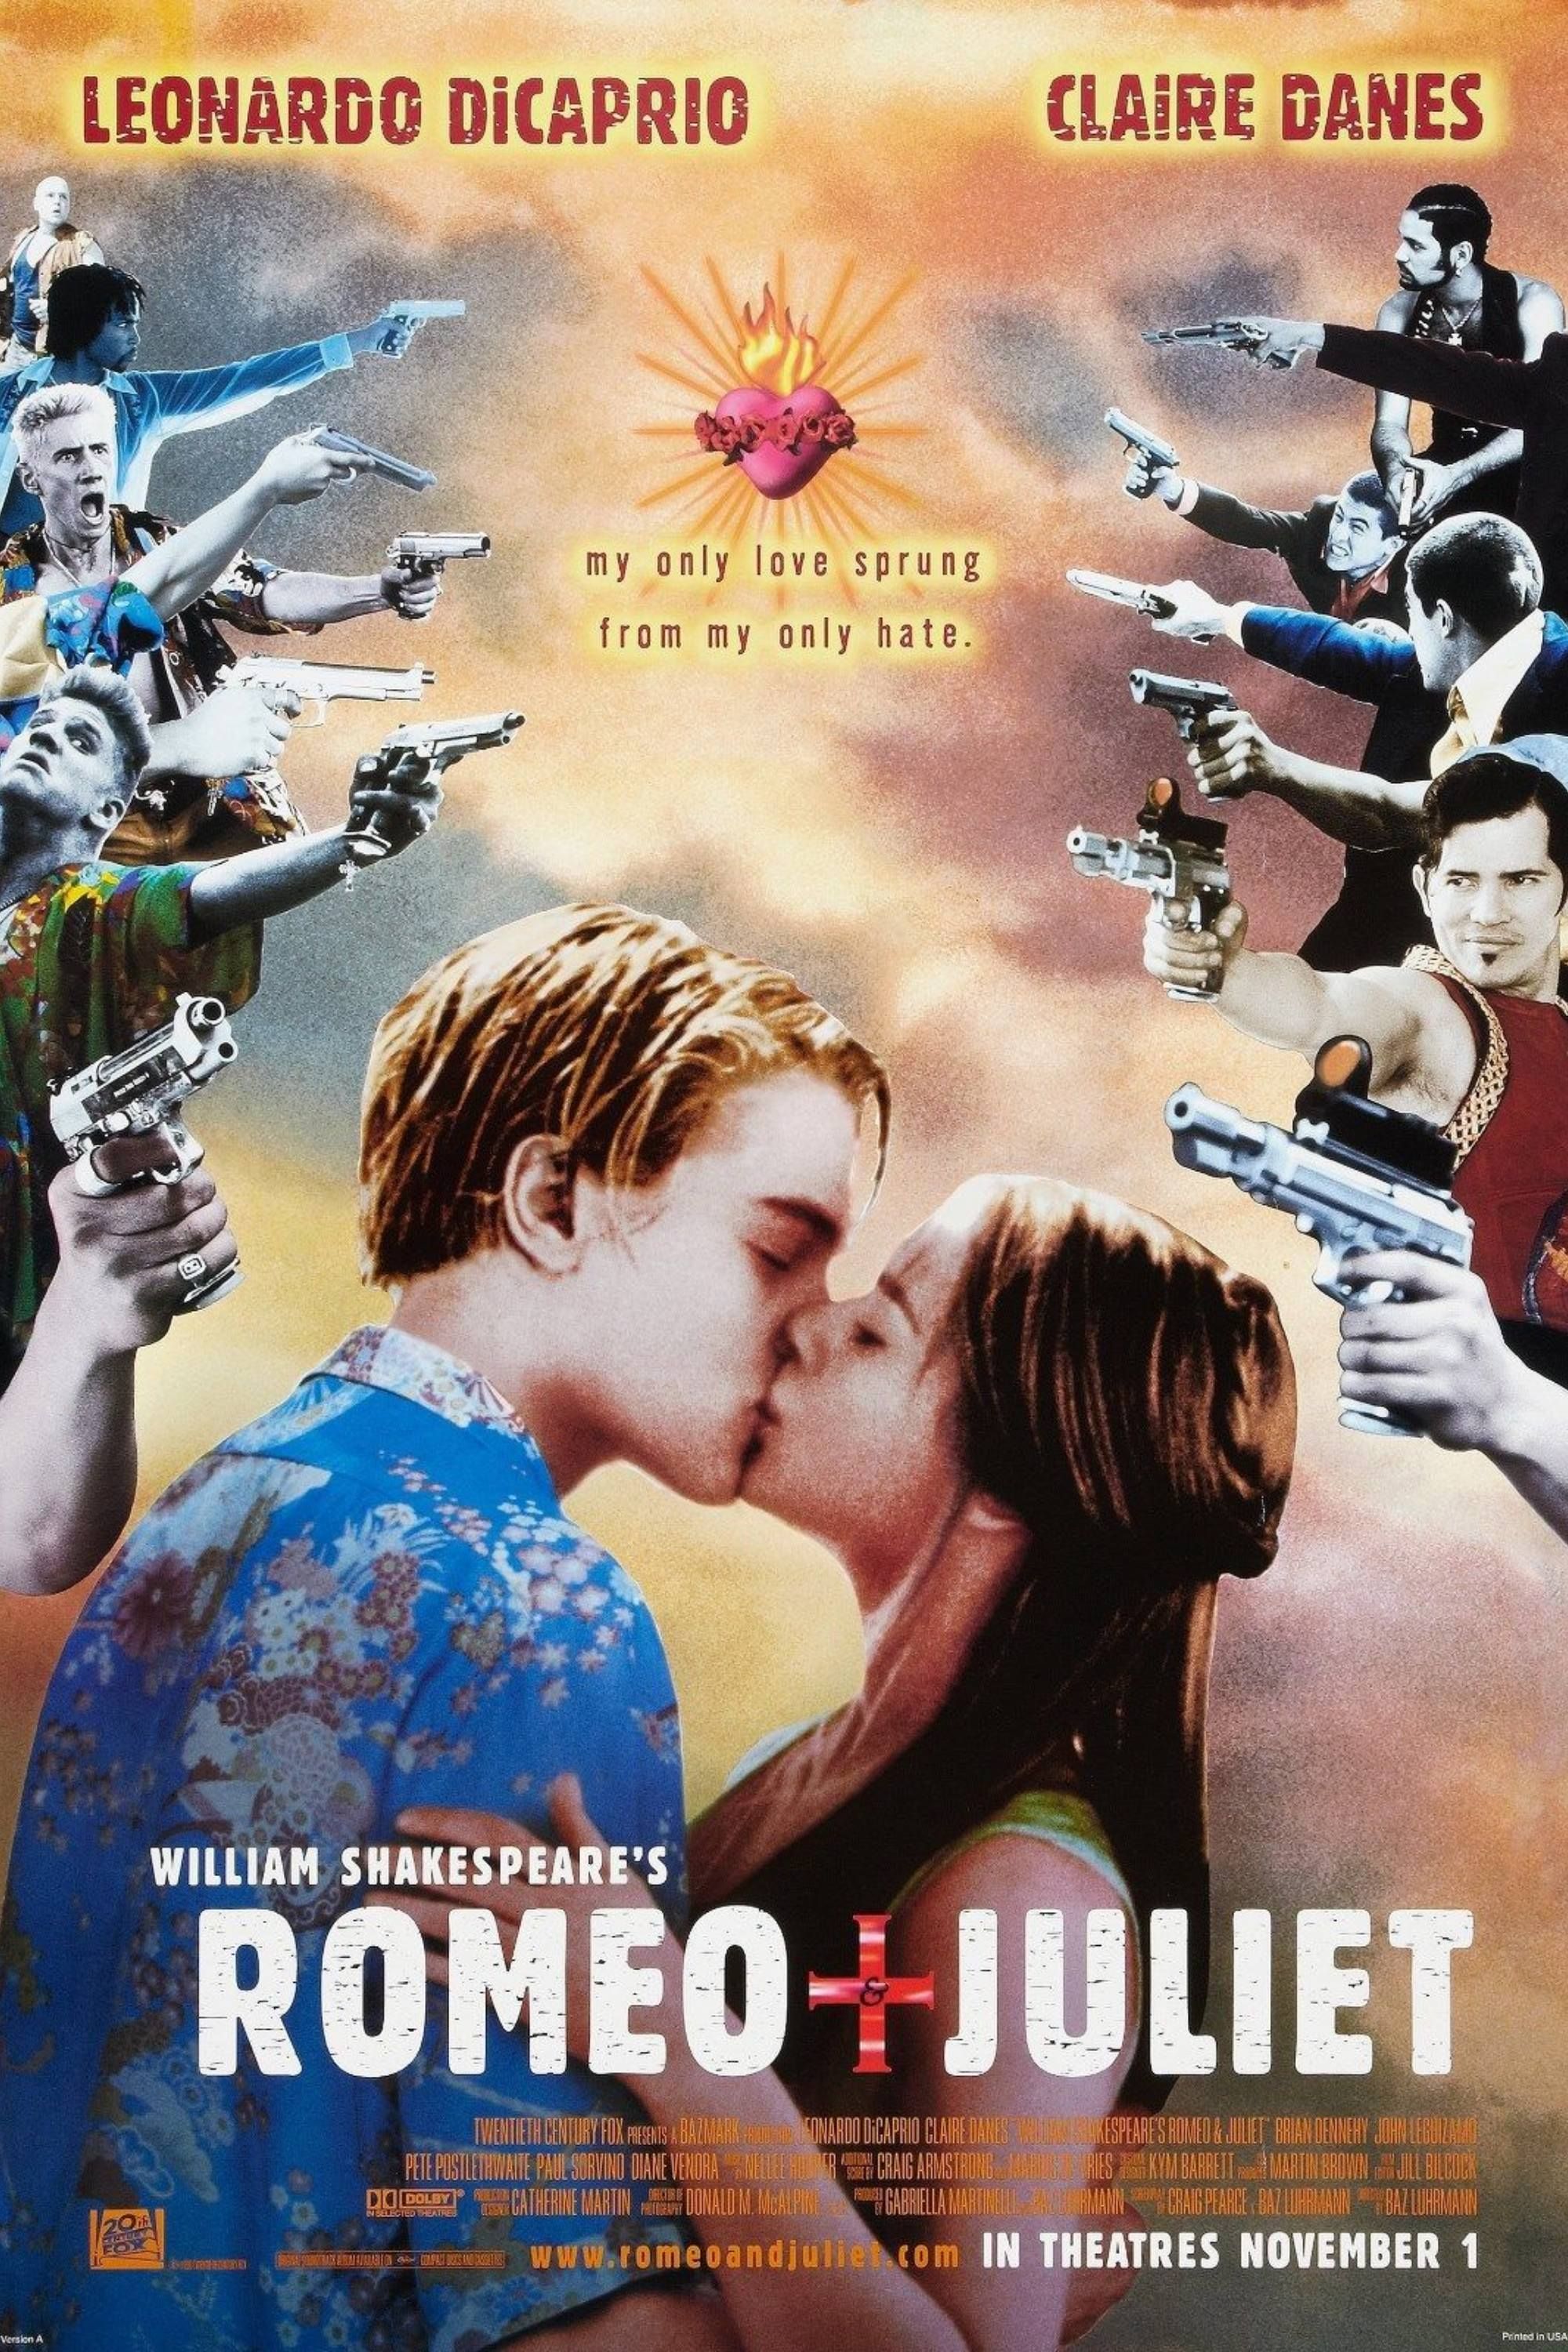 Romeo + Juliet - Poster - DiCaprio & Claire Danes Kissing